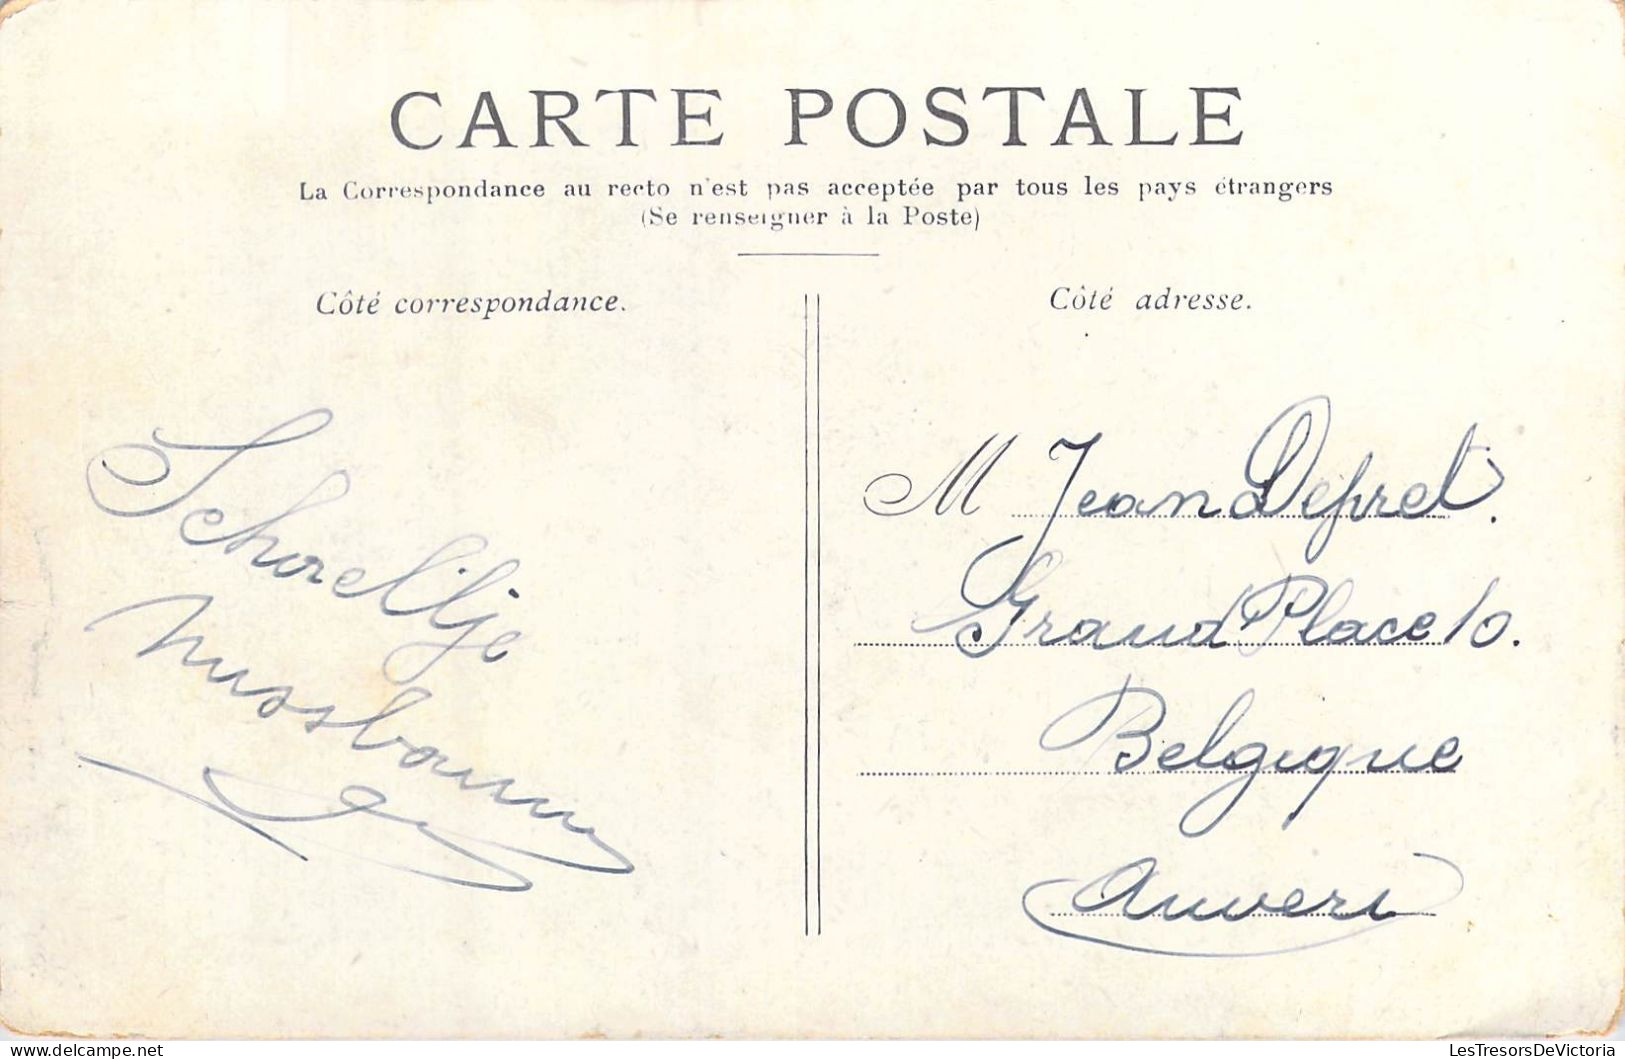 FRANCE - 75 - Paris - La Bourse - Carte Postale Ancienne - Sonstige Sehenswürdigkeiten